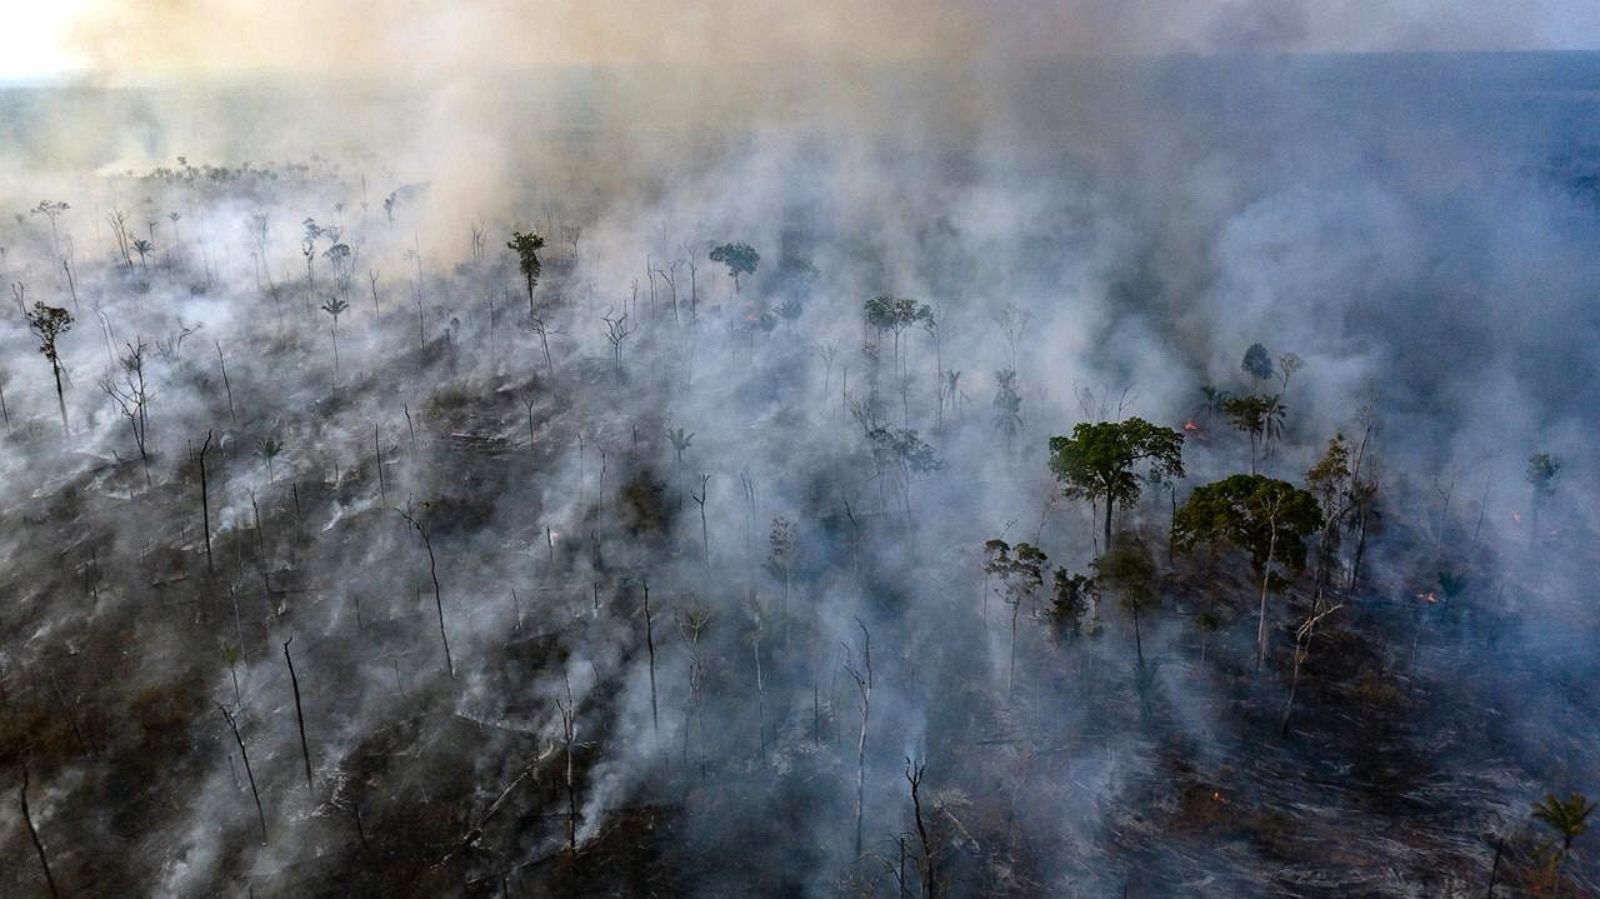 PHOTOS The burning Amazon rainforest Photos Image 141 ABC News